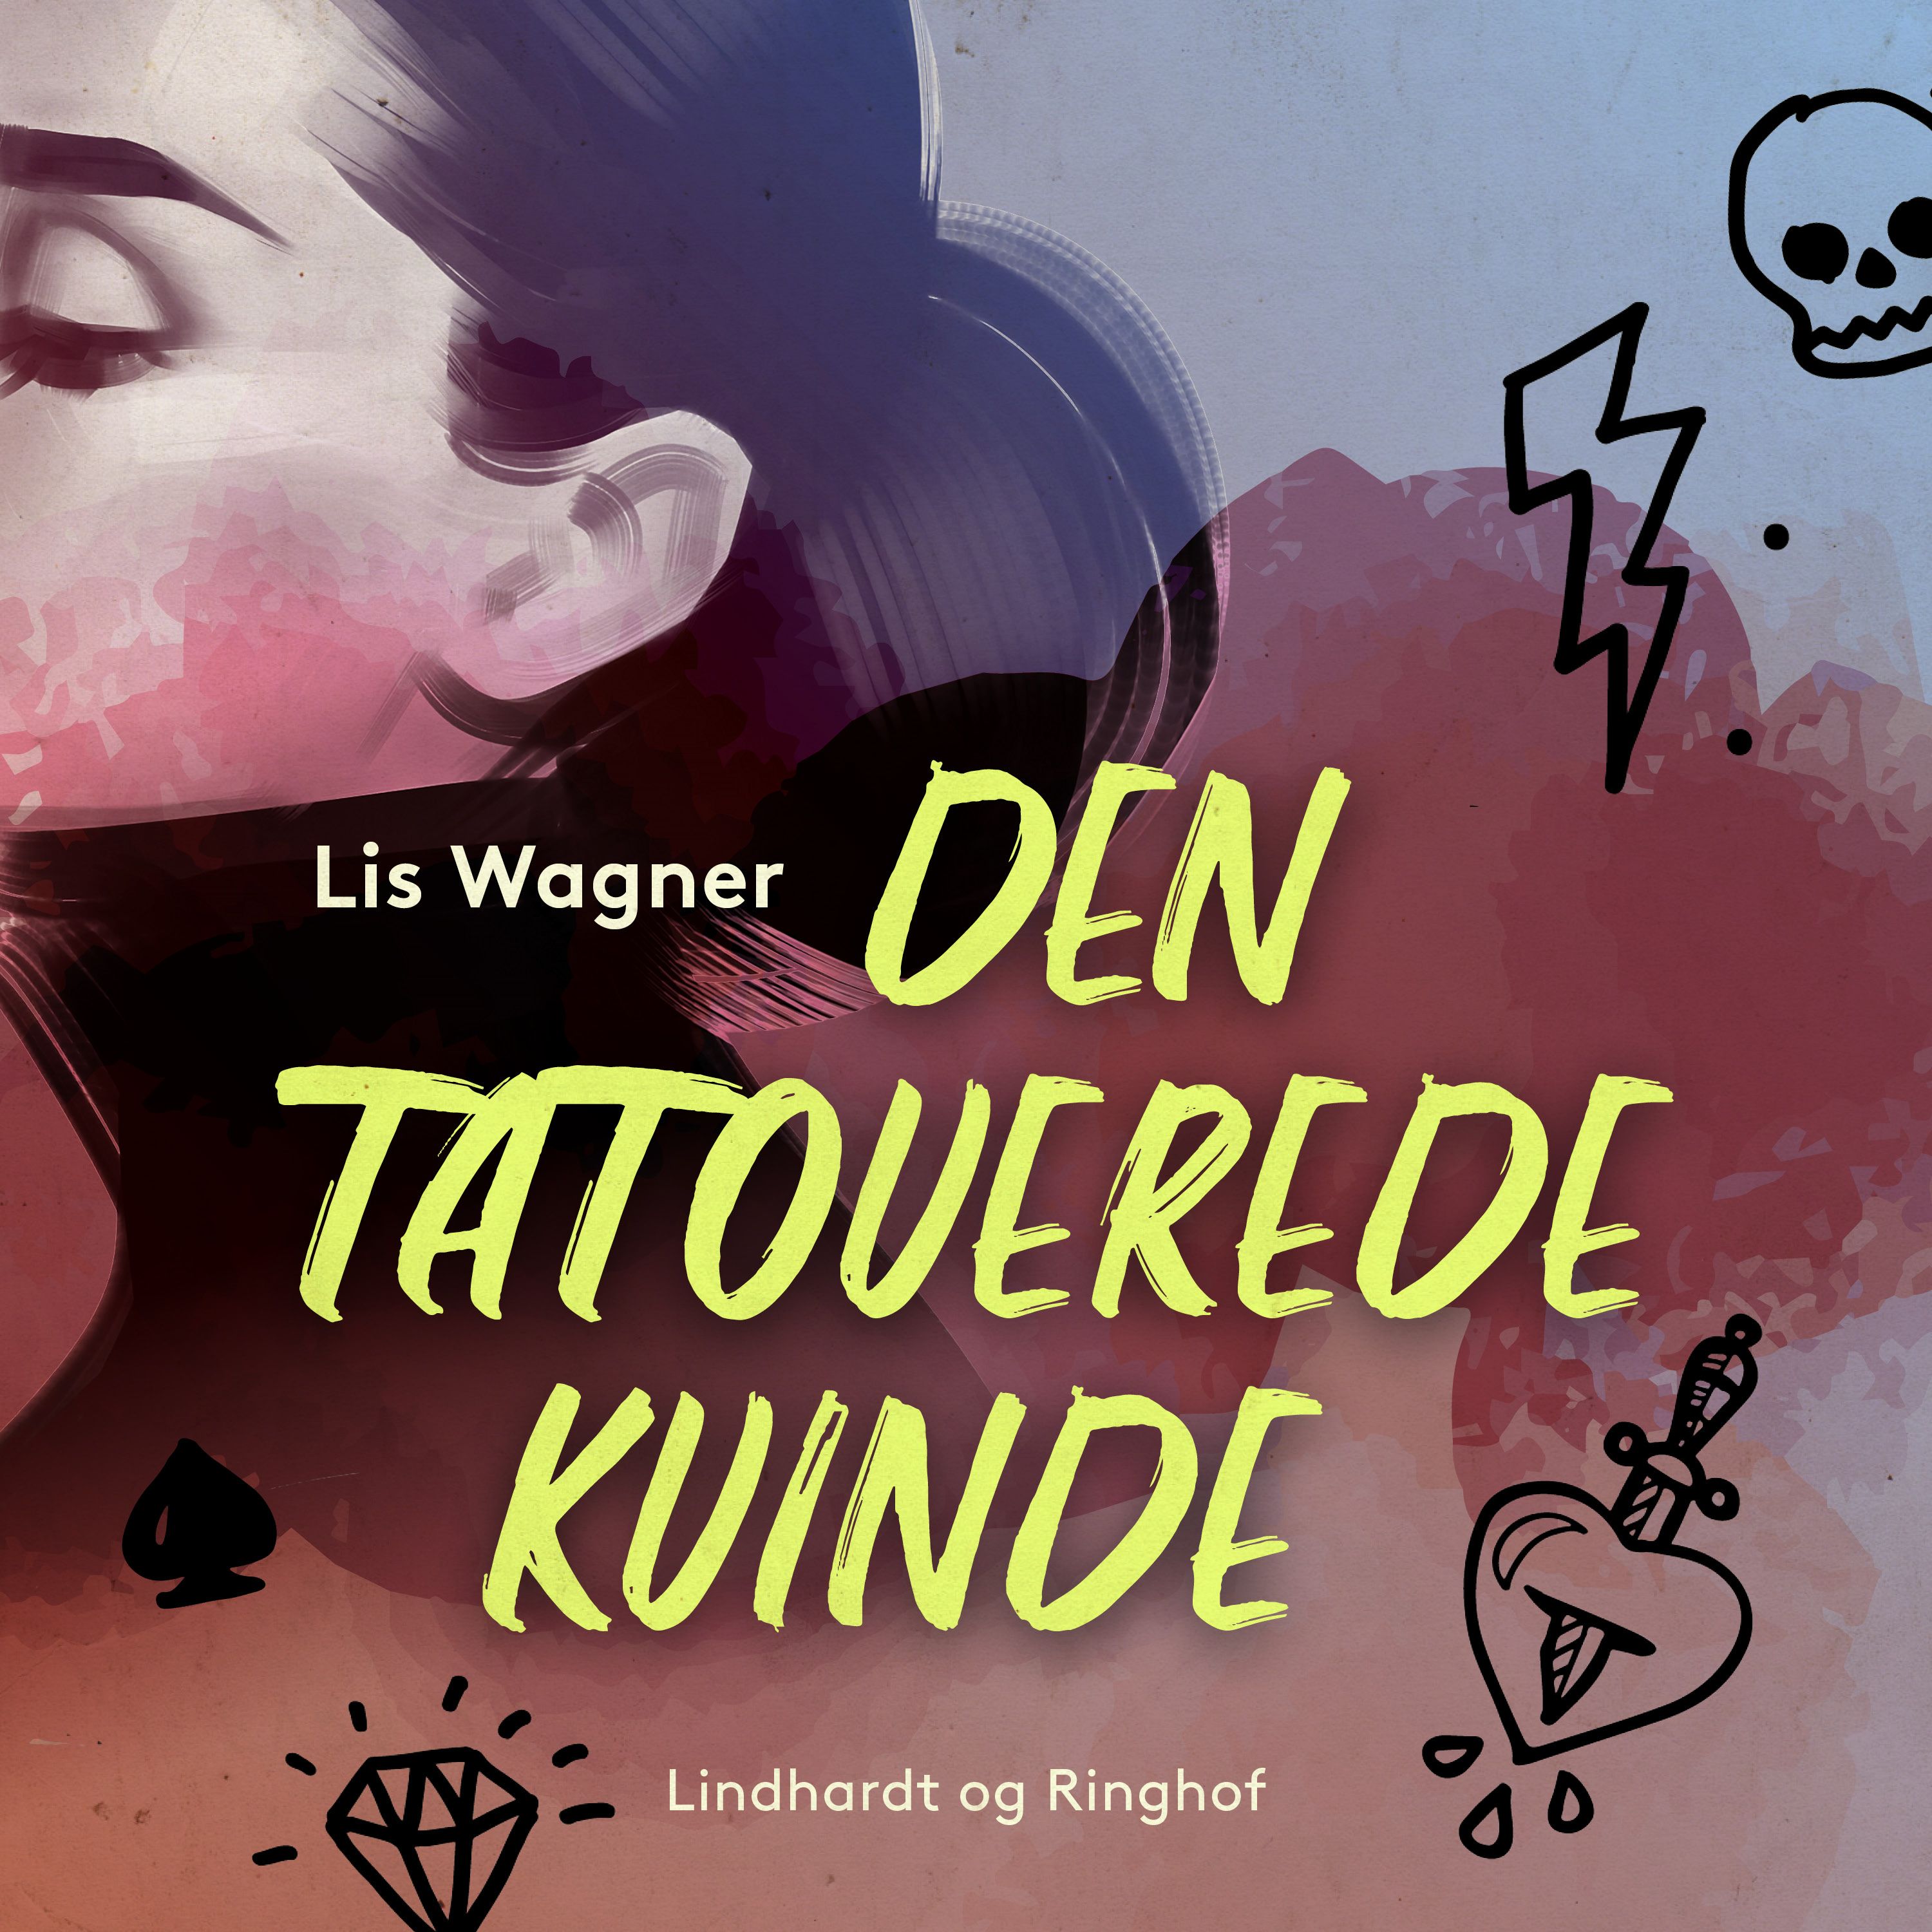 Den tatoverede kvinde, ljudbok av Lis Wagner